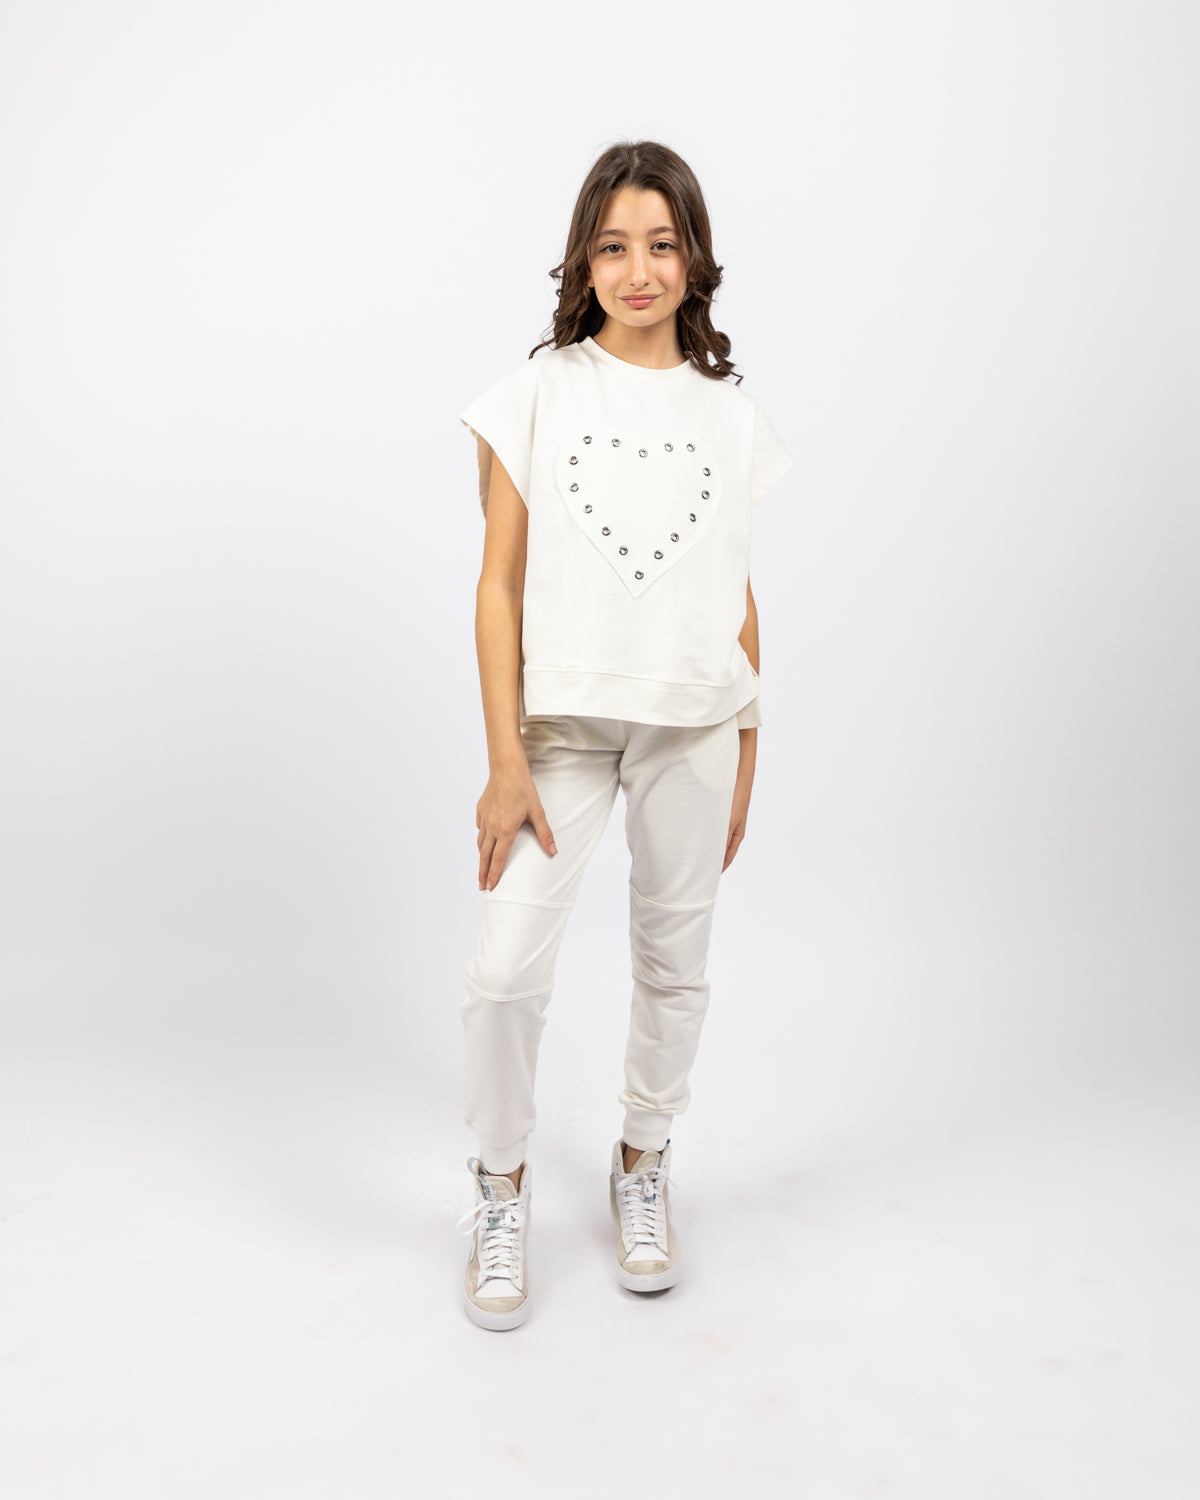 Heart Sweatshirt With Studs For Girls - White